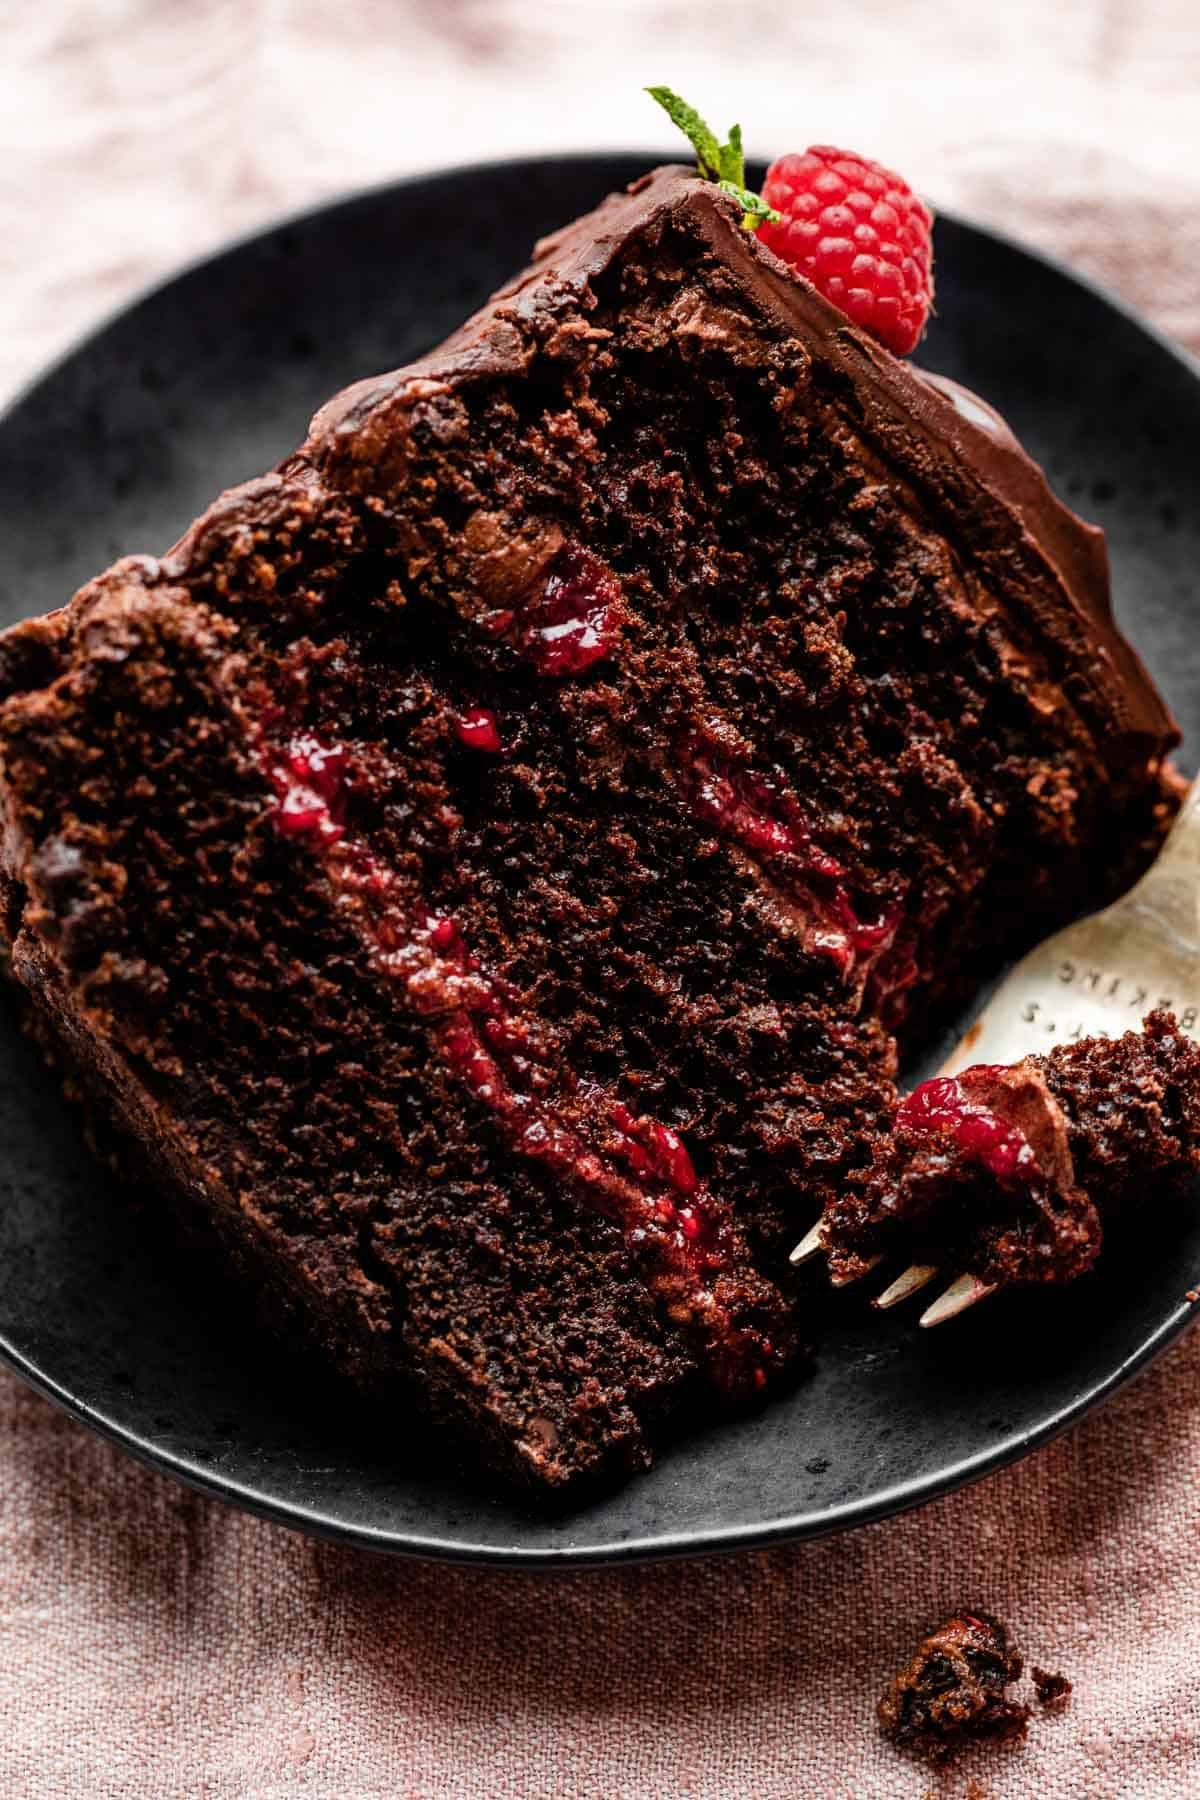 slice of dark chocolate cake with raspberry filling and chocolate ganache on black plate.